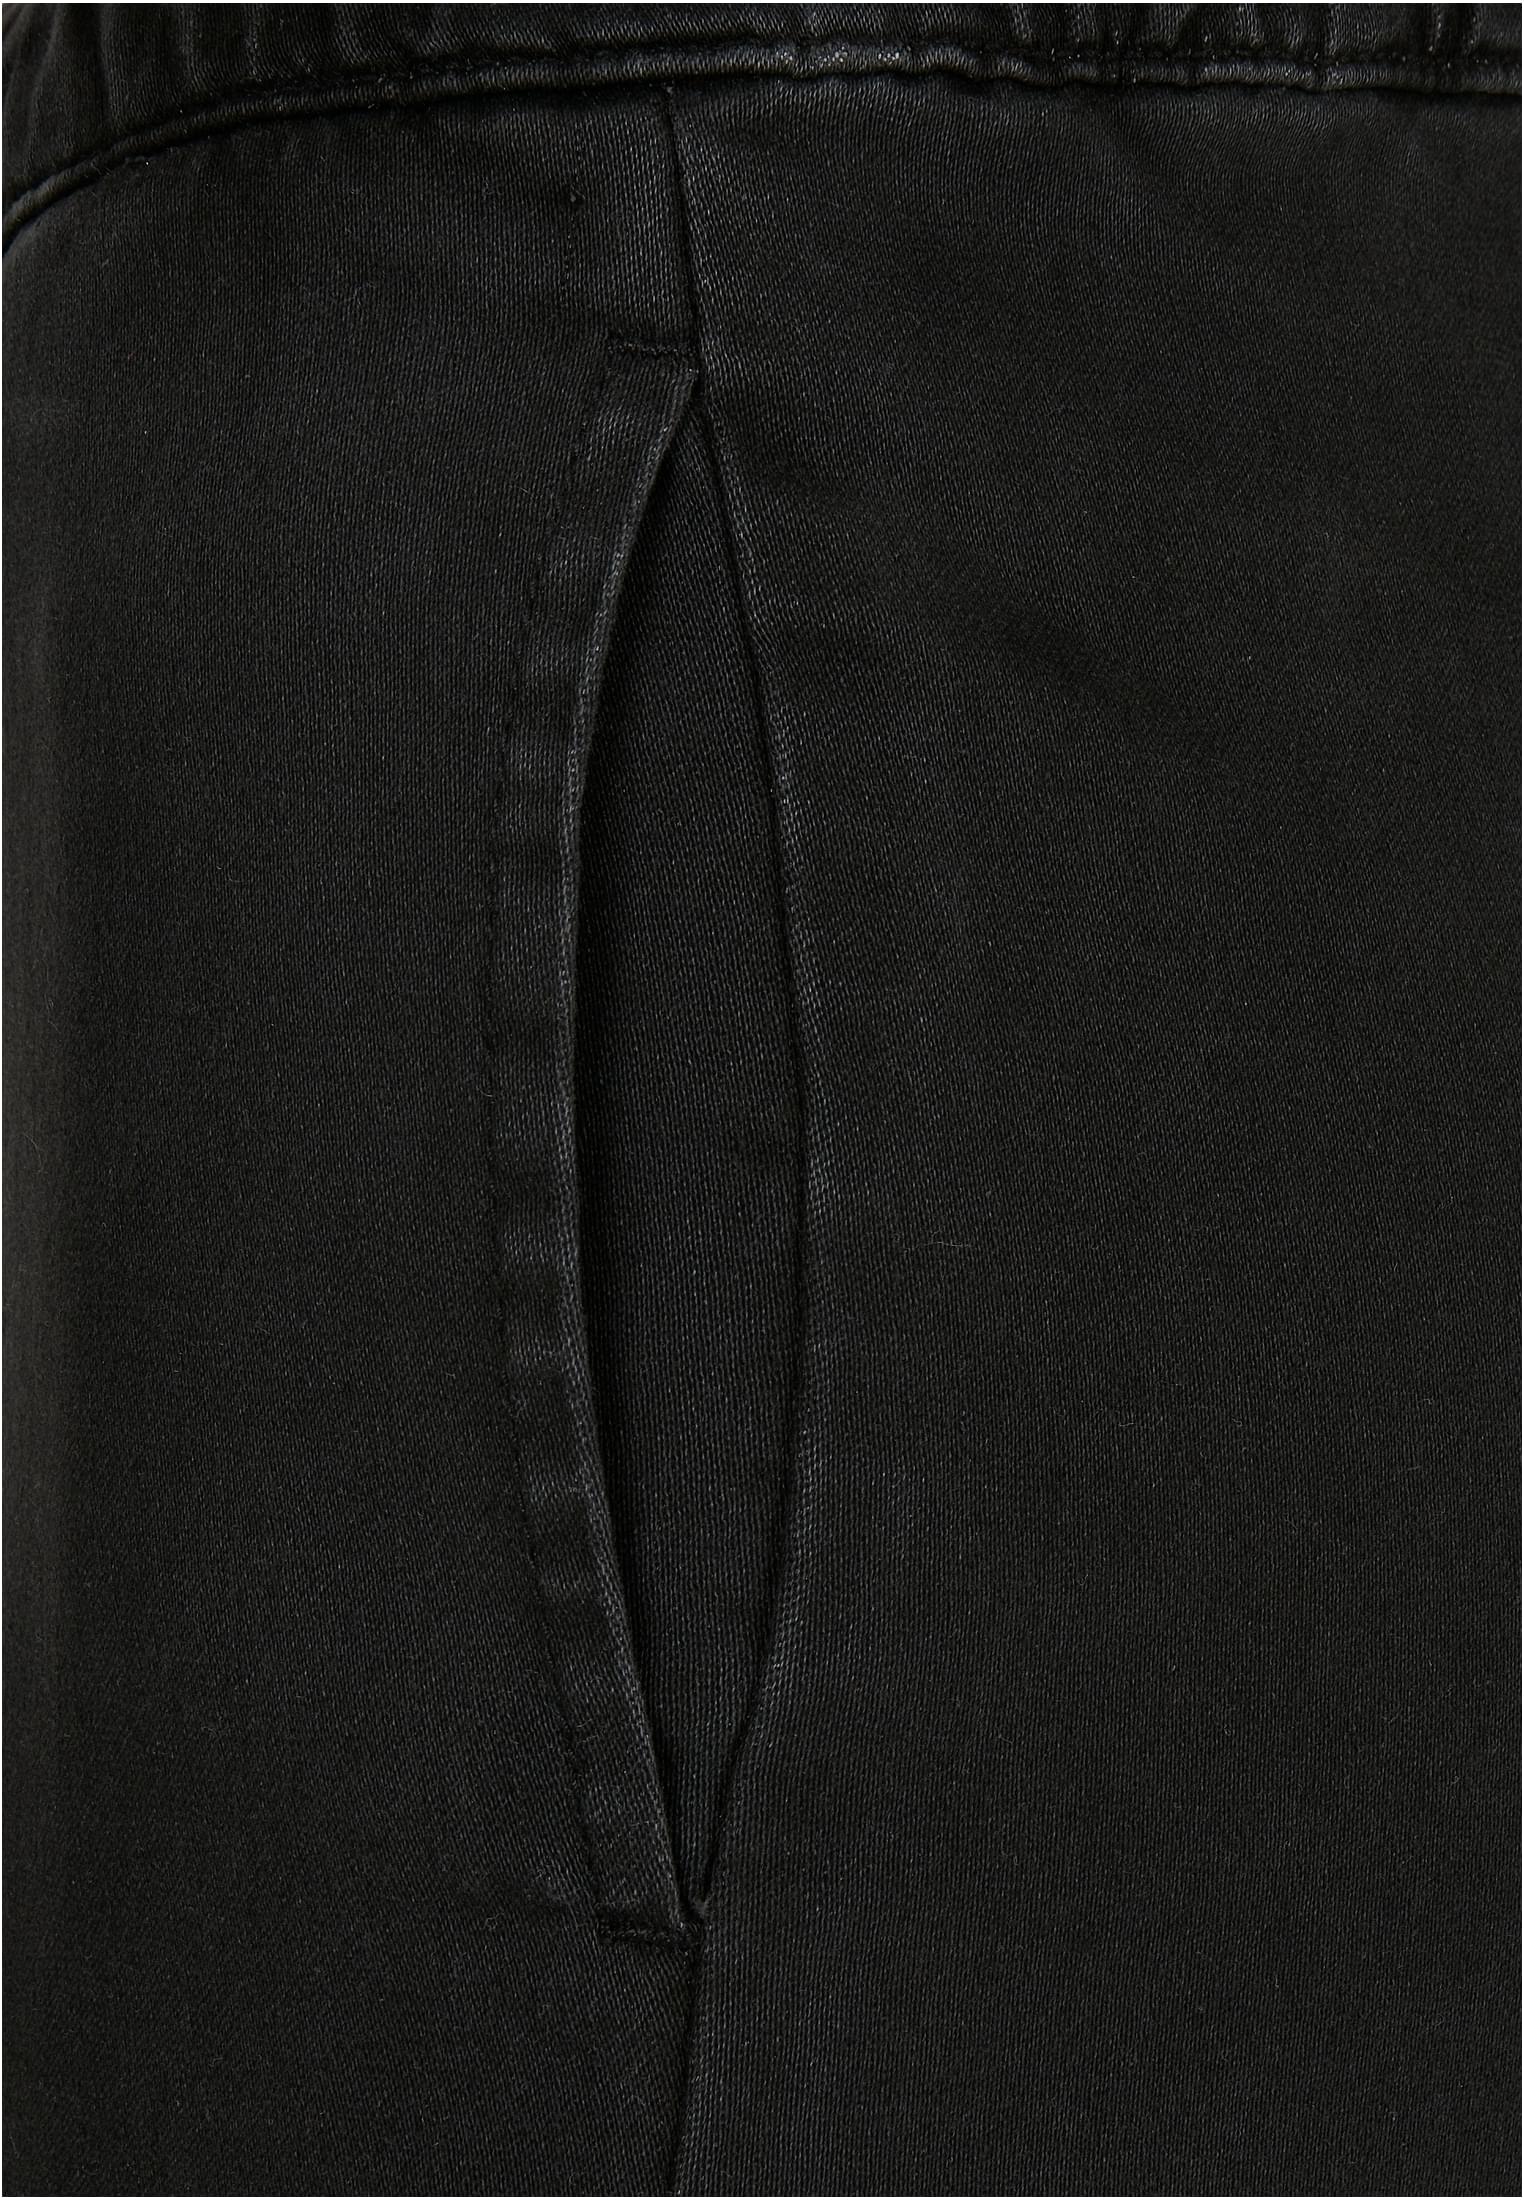 Hosen Ladies Knitted Denim High Waist Cargo Pants in Farbe black